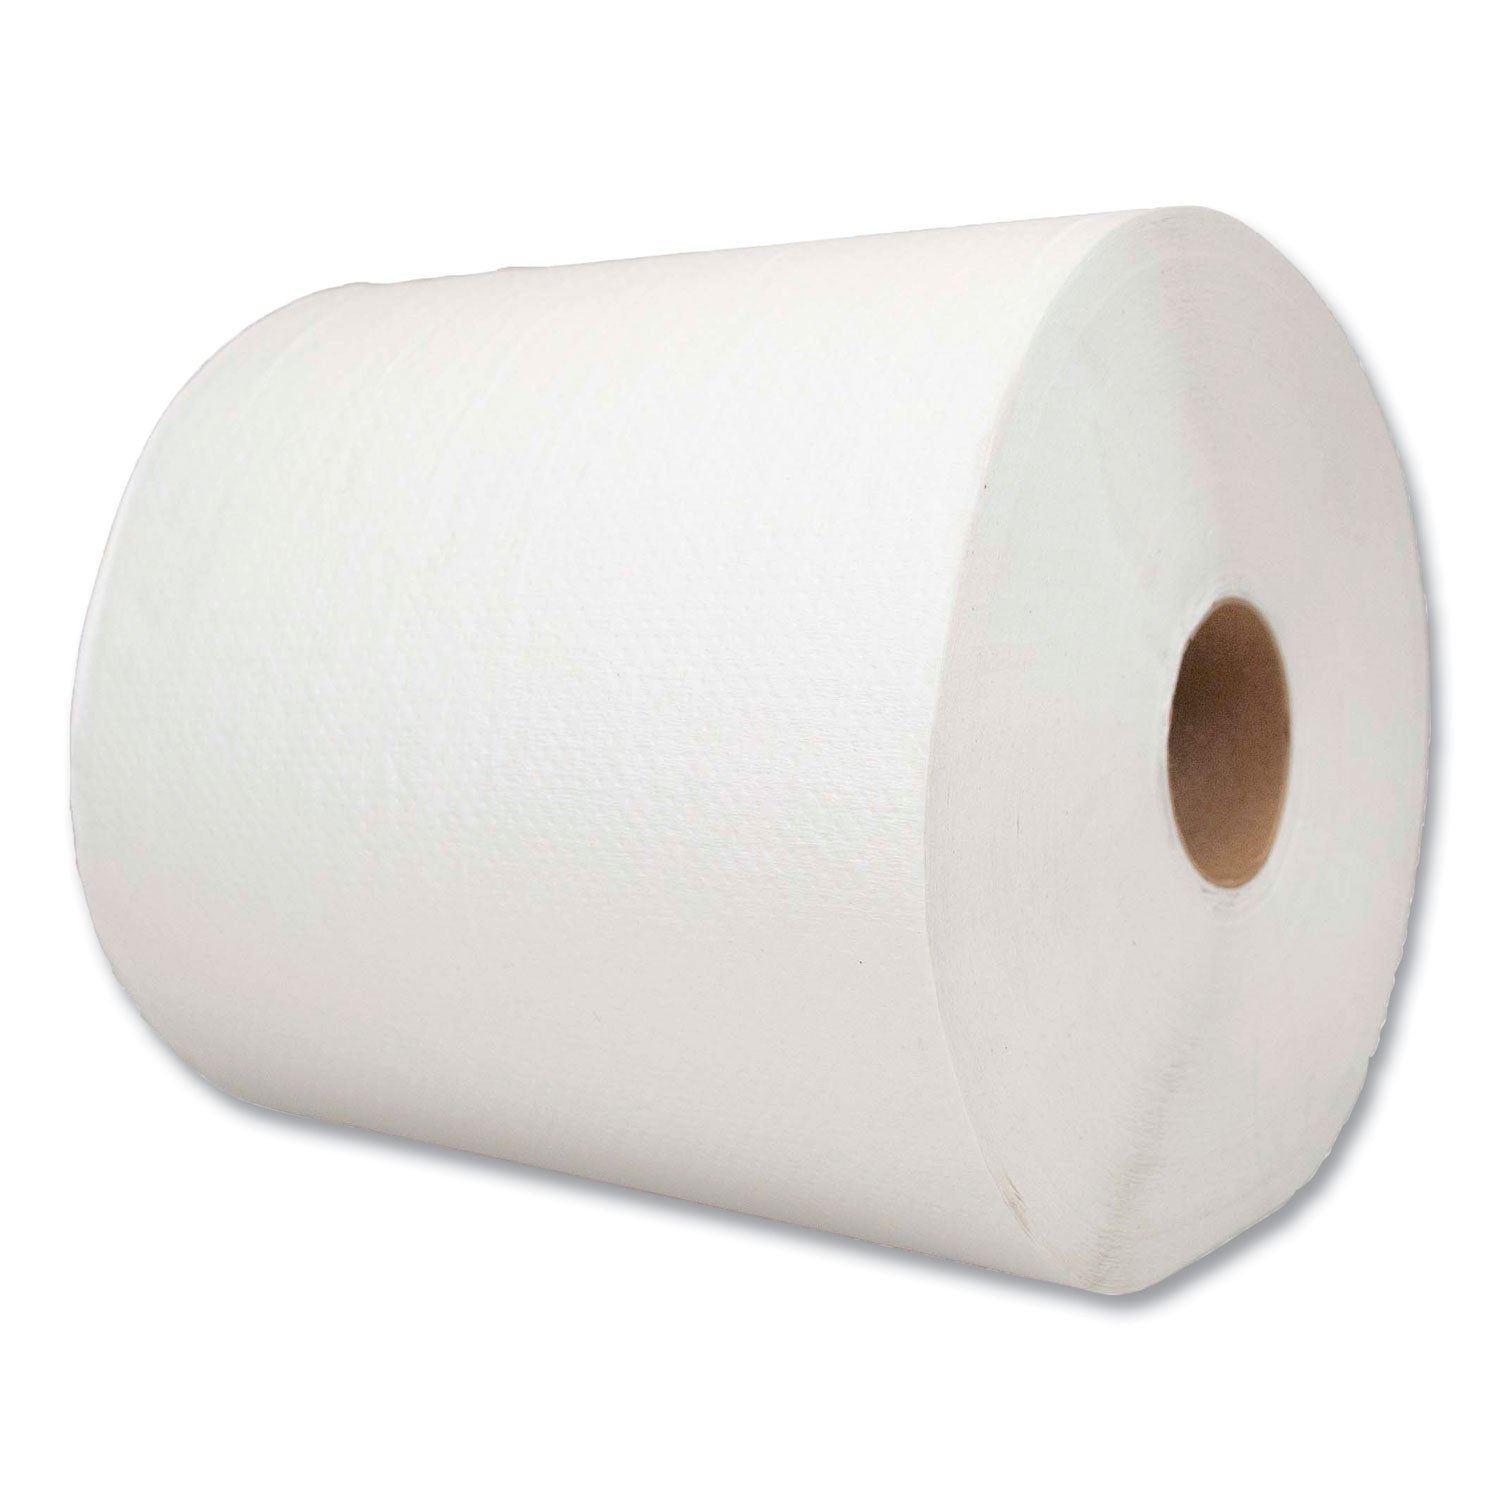 hard-wound-towel-1-ply-8-x-700-ft-white-6-carton_bwk700w - 3